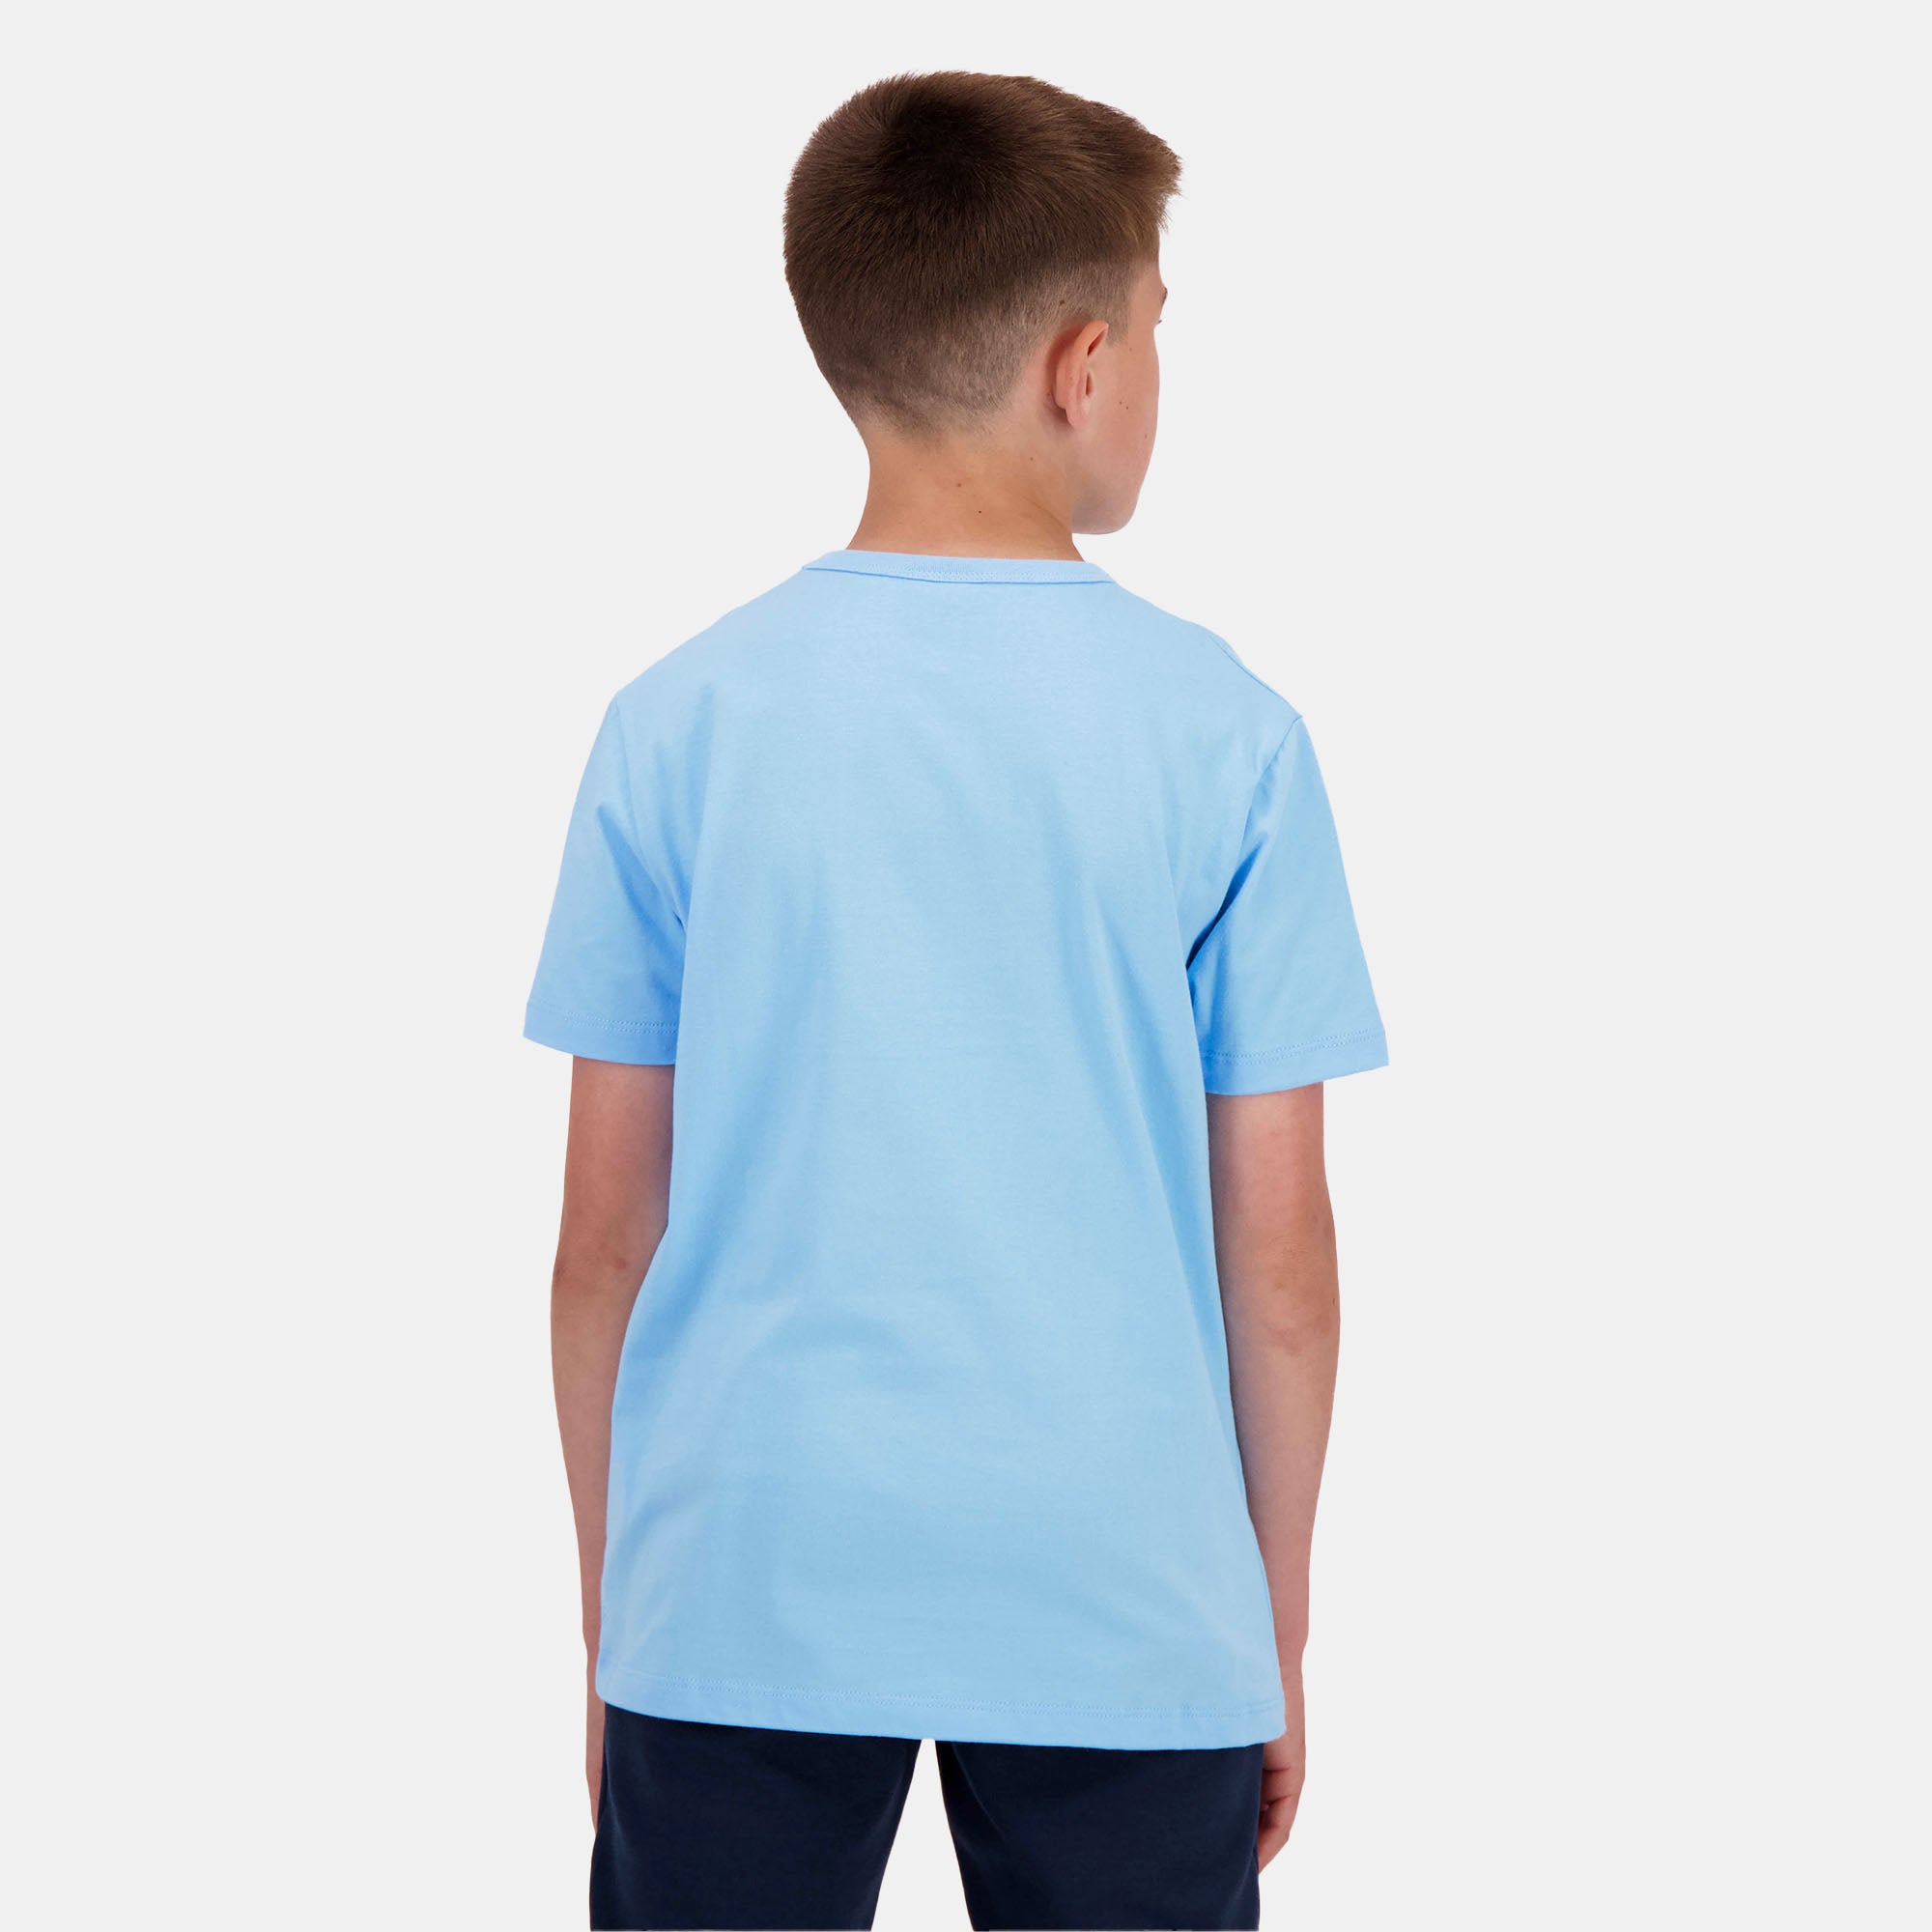 2422793-AB FANWEAR Tee SS N°1 Enfant fly blue  | T-Shirt for kids